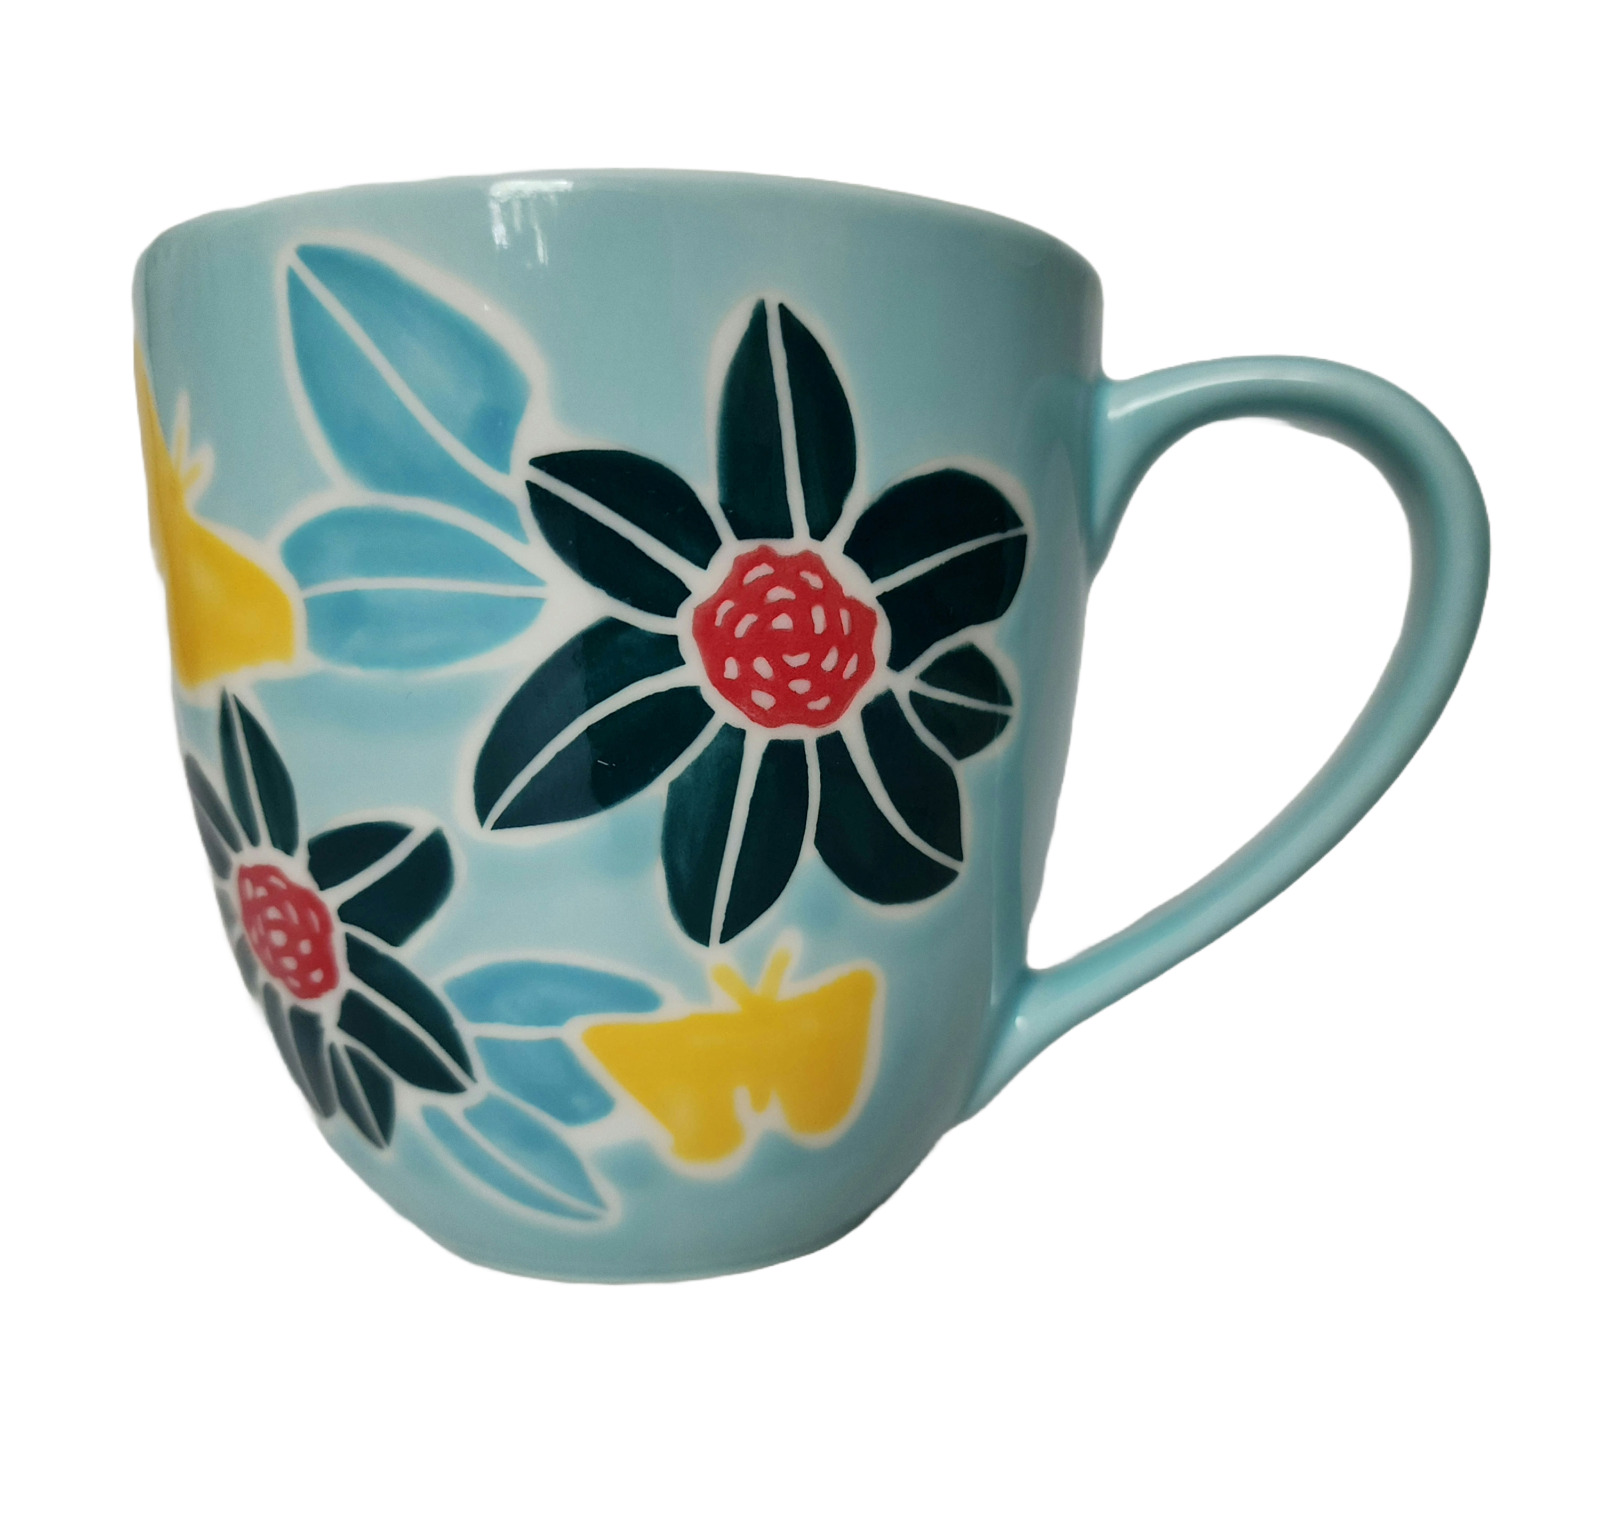 2006 Starbucks 16 fl oz Ceramic Coffee Tea Mug Blue Yellow Butterflies Flowers